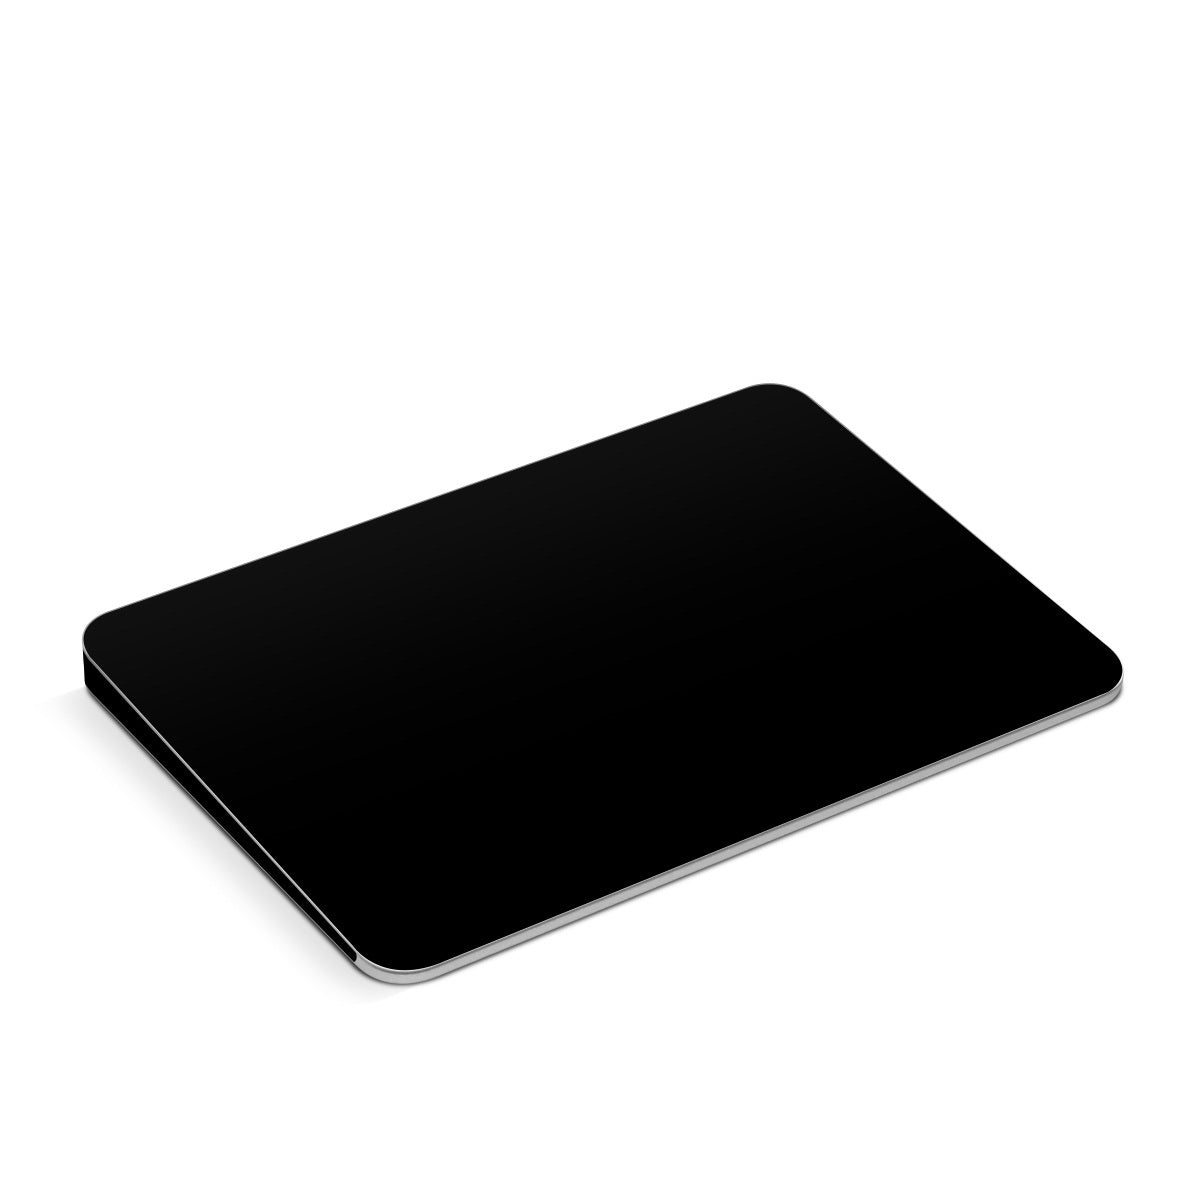 Solid State Black - Apple Magic Trackpad Skin